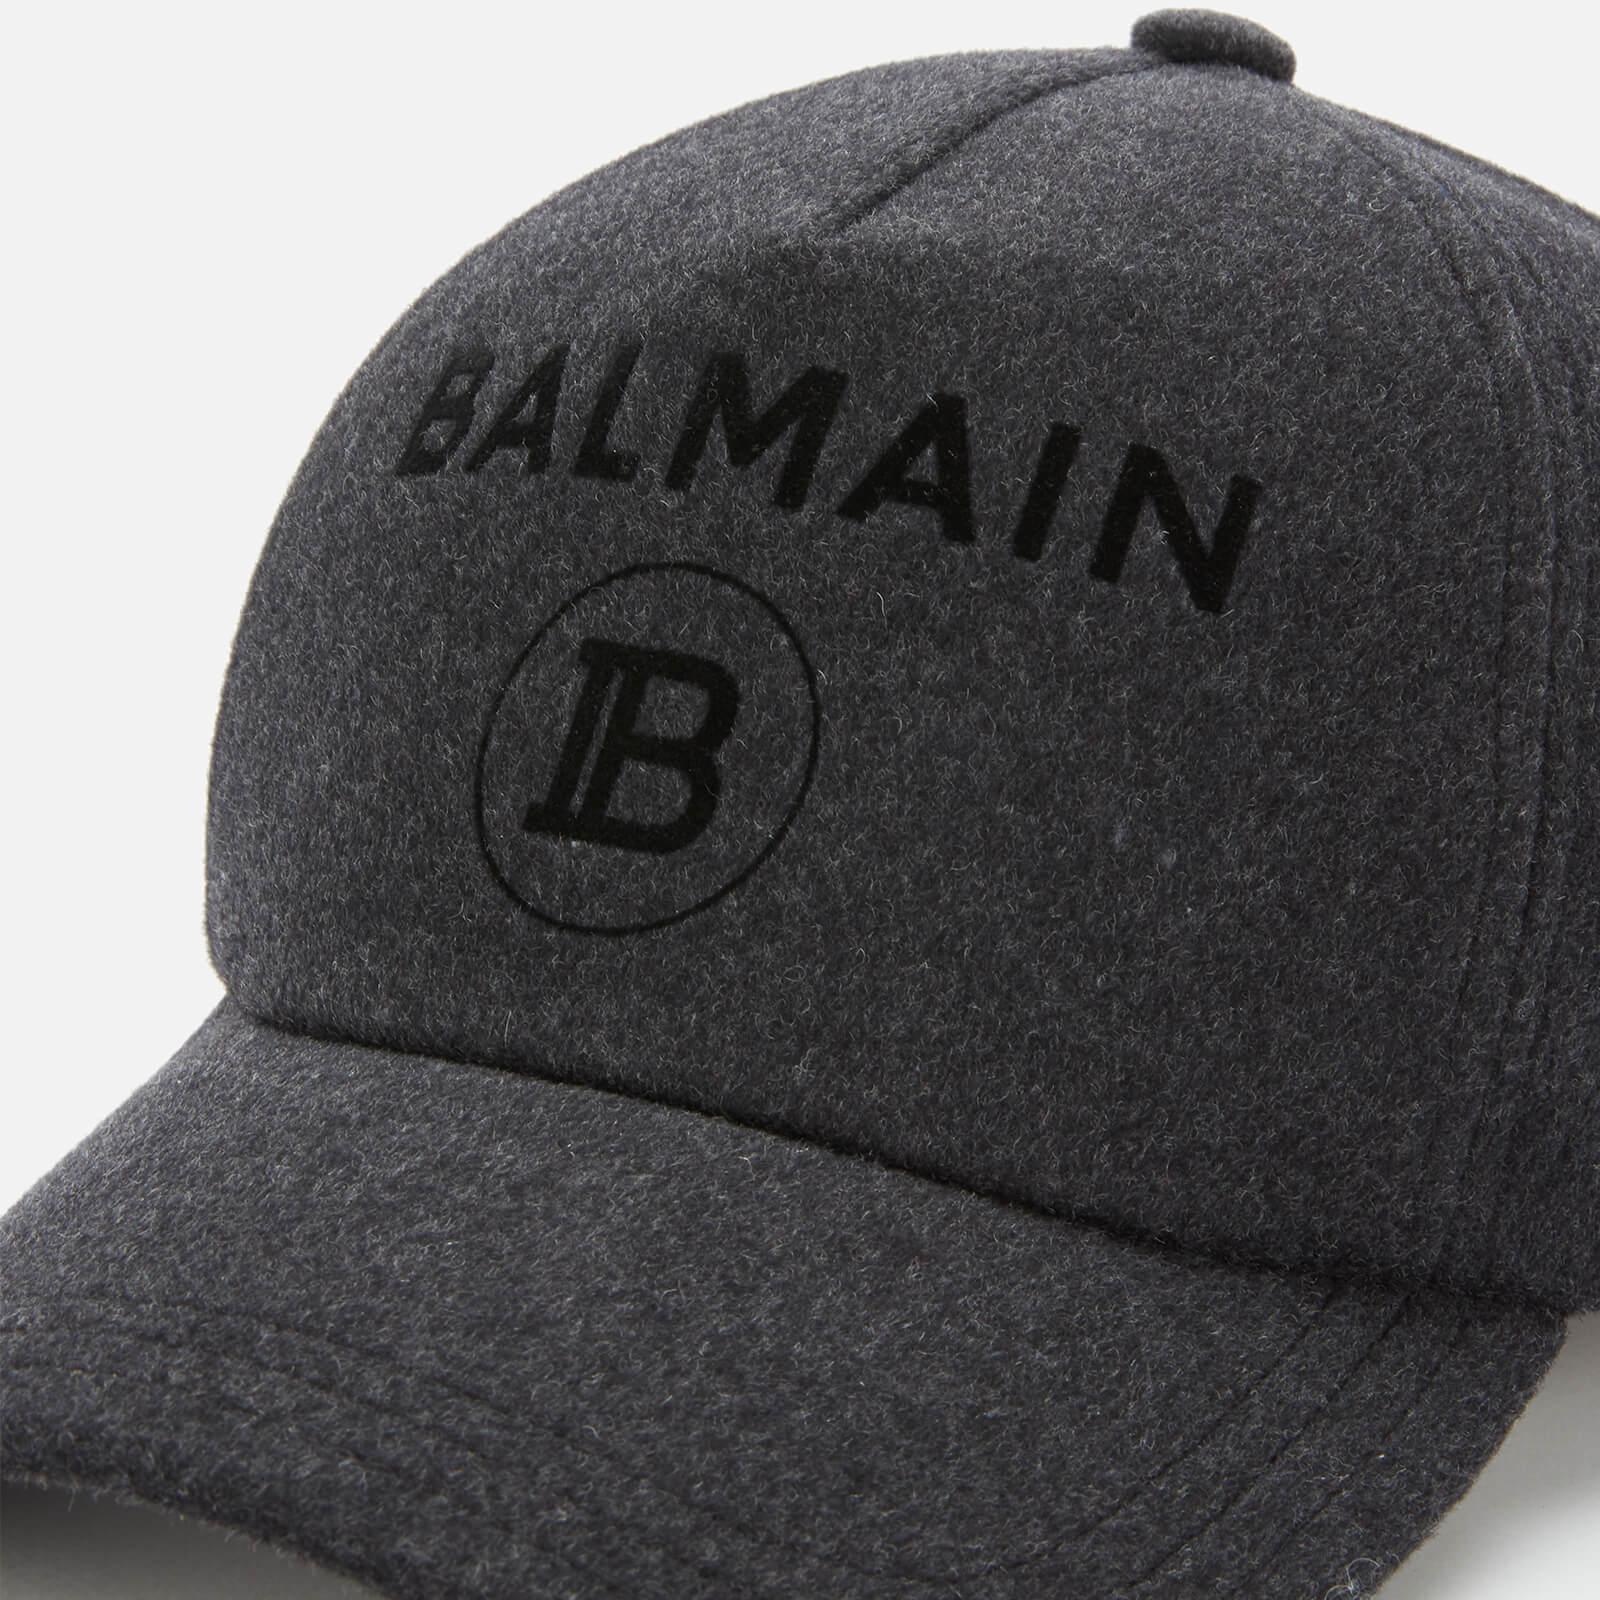 Balmain Logo Cap in Black for Men - Lyst